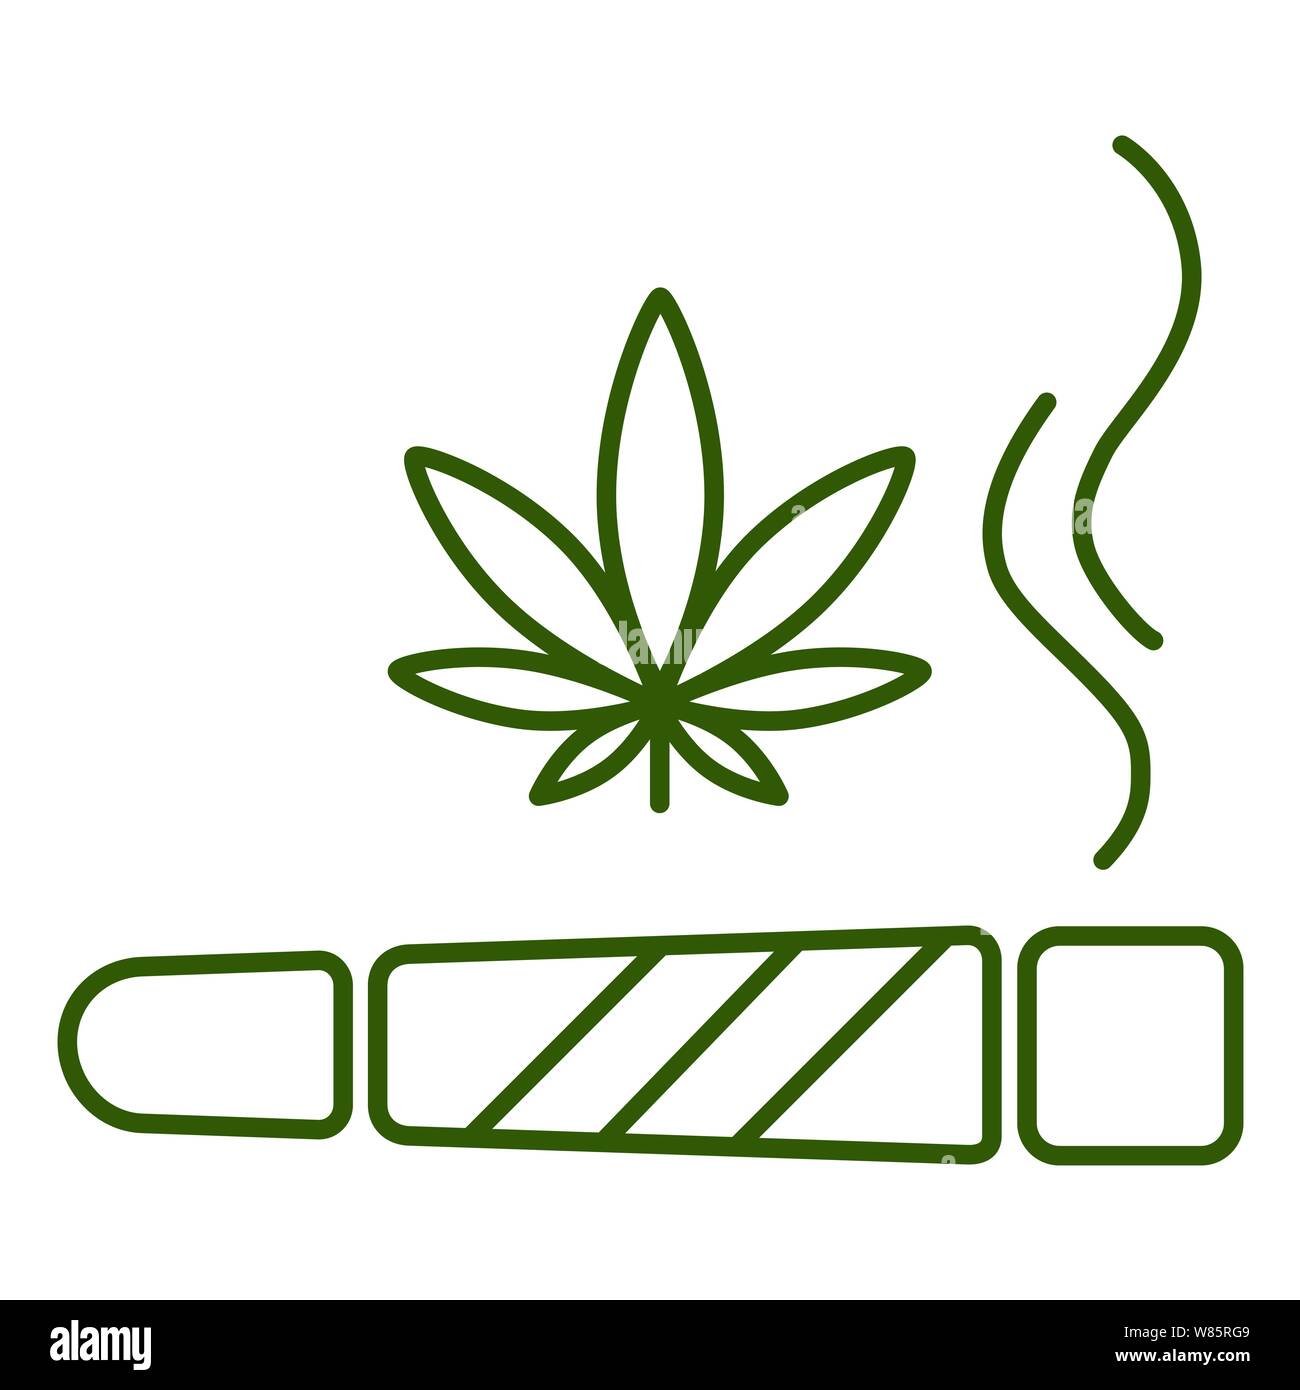 Marijuana joint, spliff. Cigarette with drug, marijuana cigarette rolled. Isolated vector illustration on white background. Stock Vector